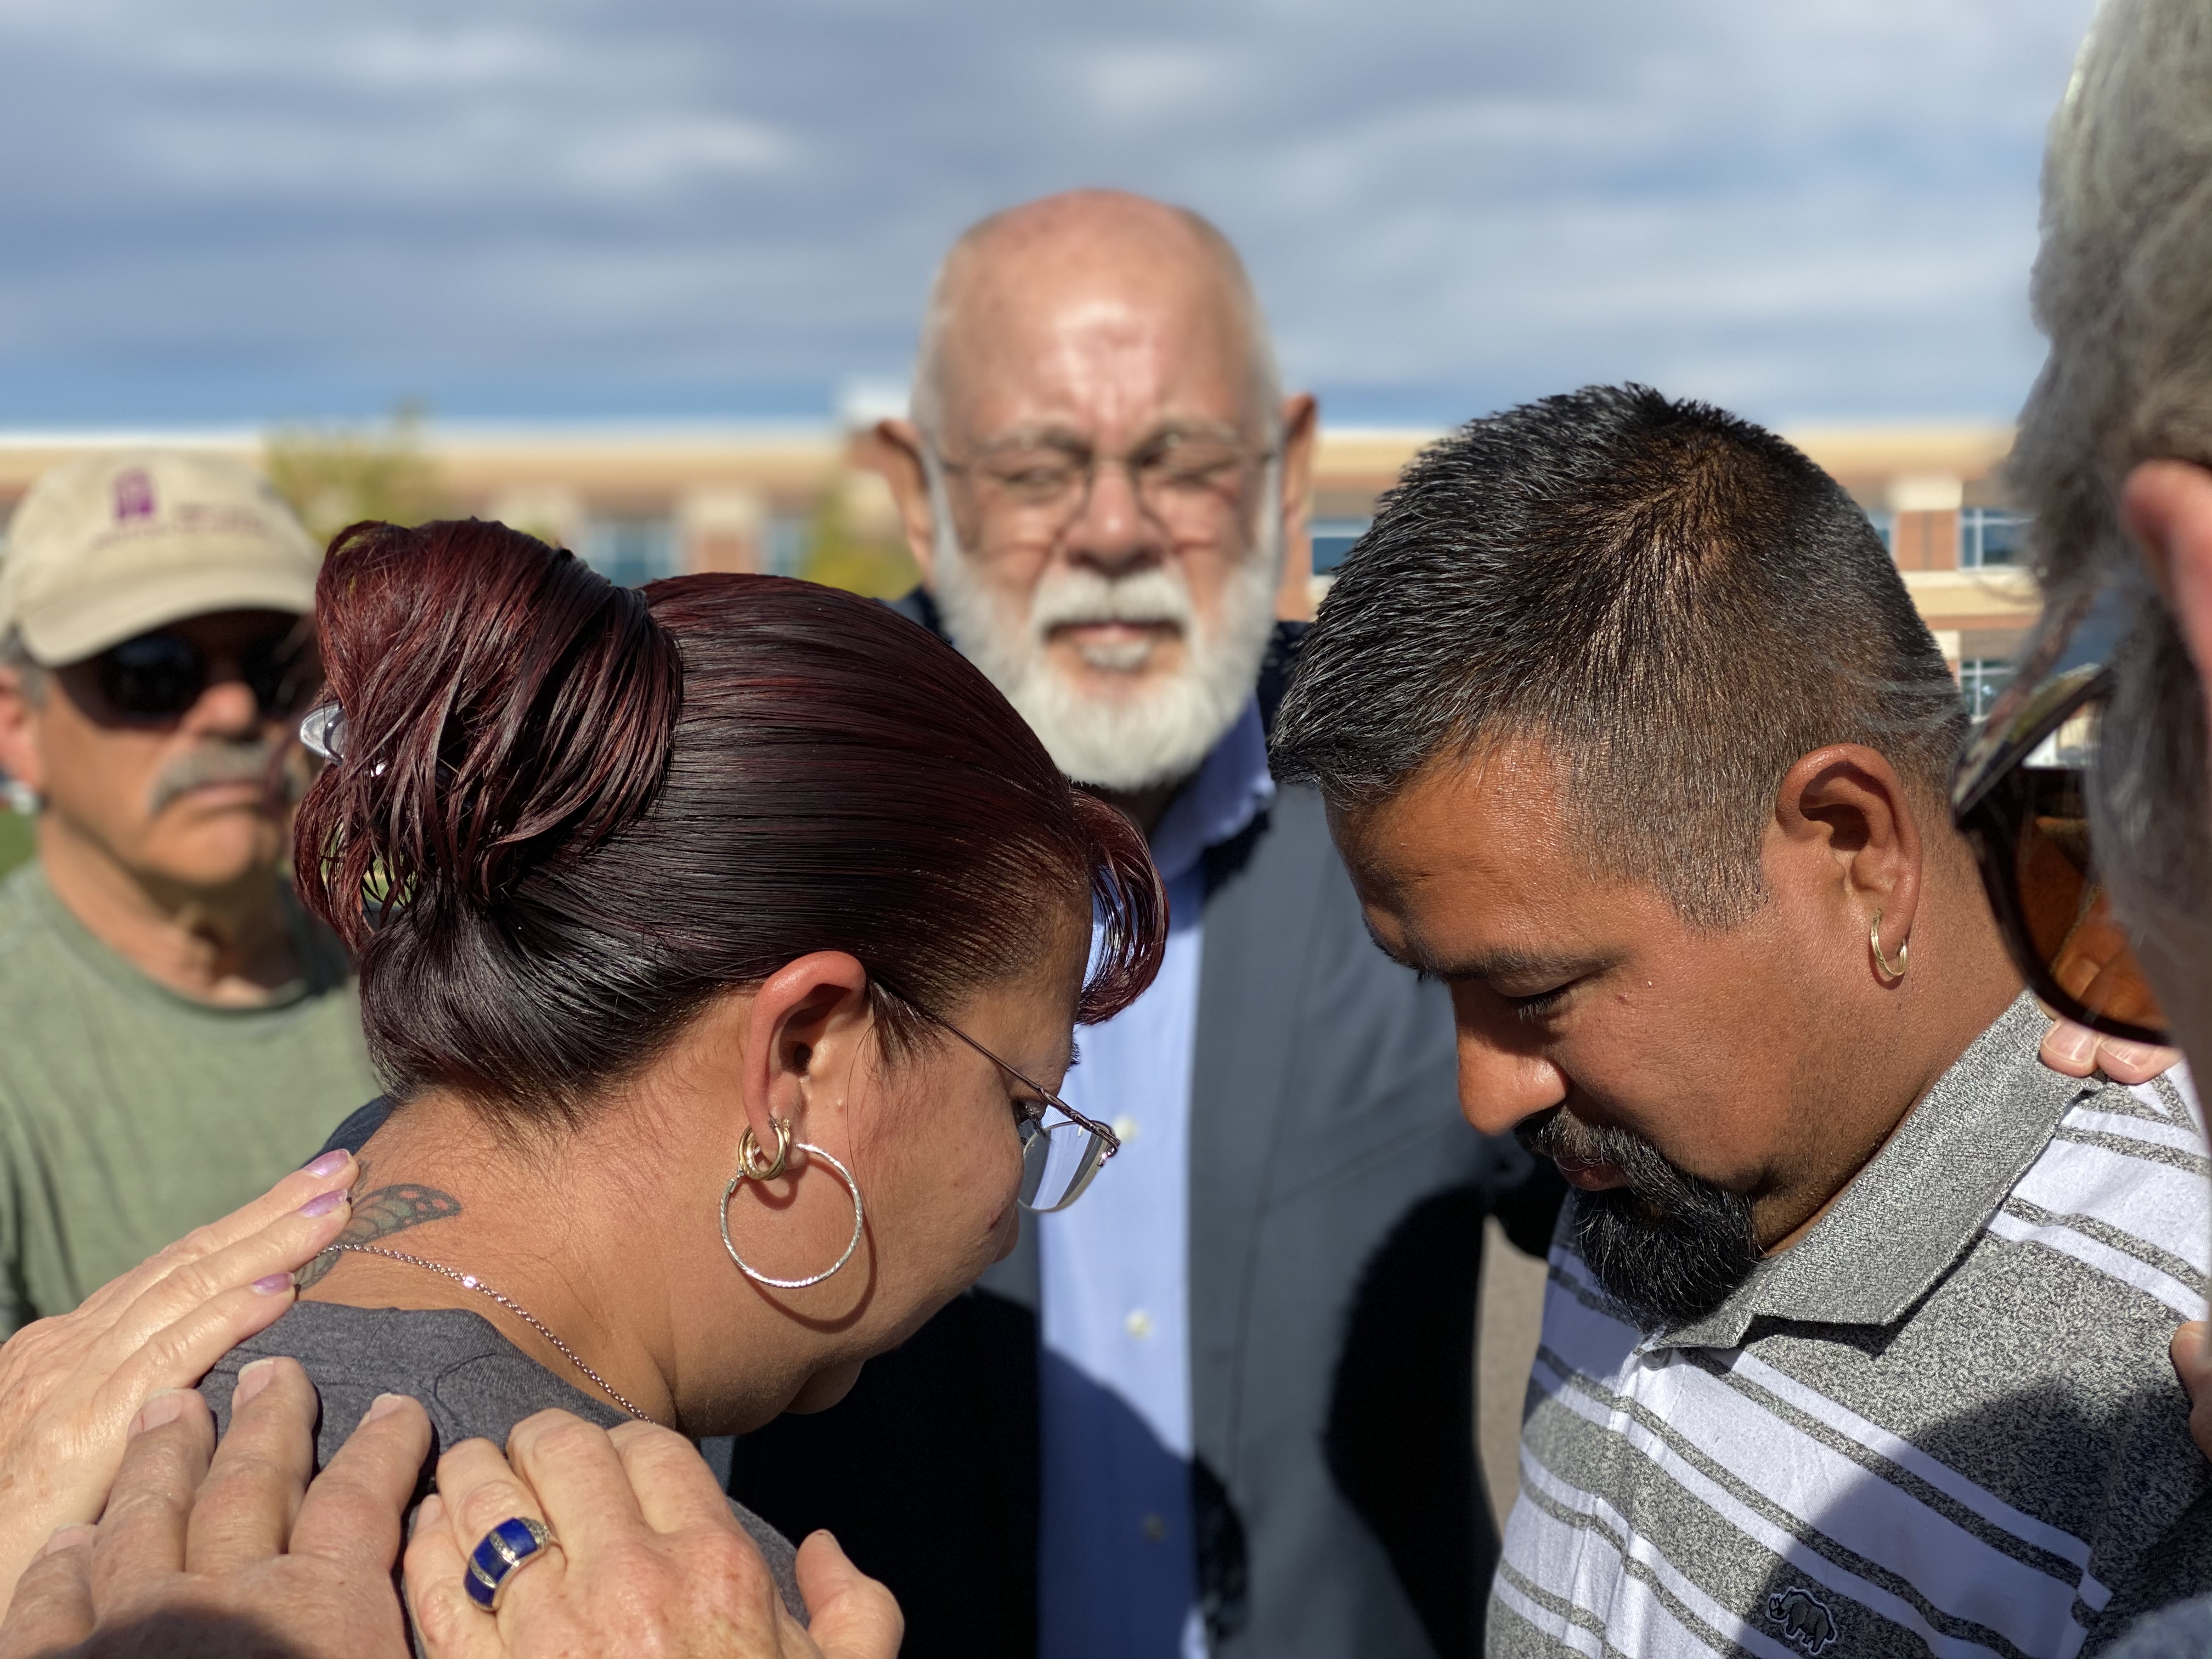  ICE detains Colorado father, Jorge Rafael Zaldivar Mendieta, at Routine Check In